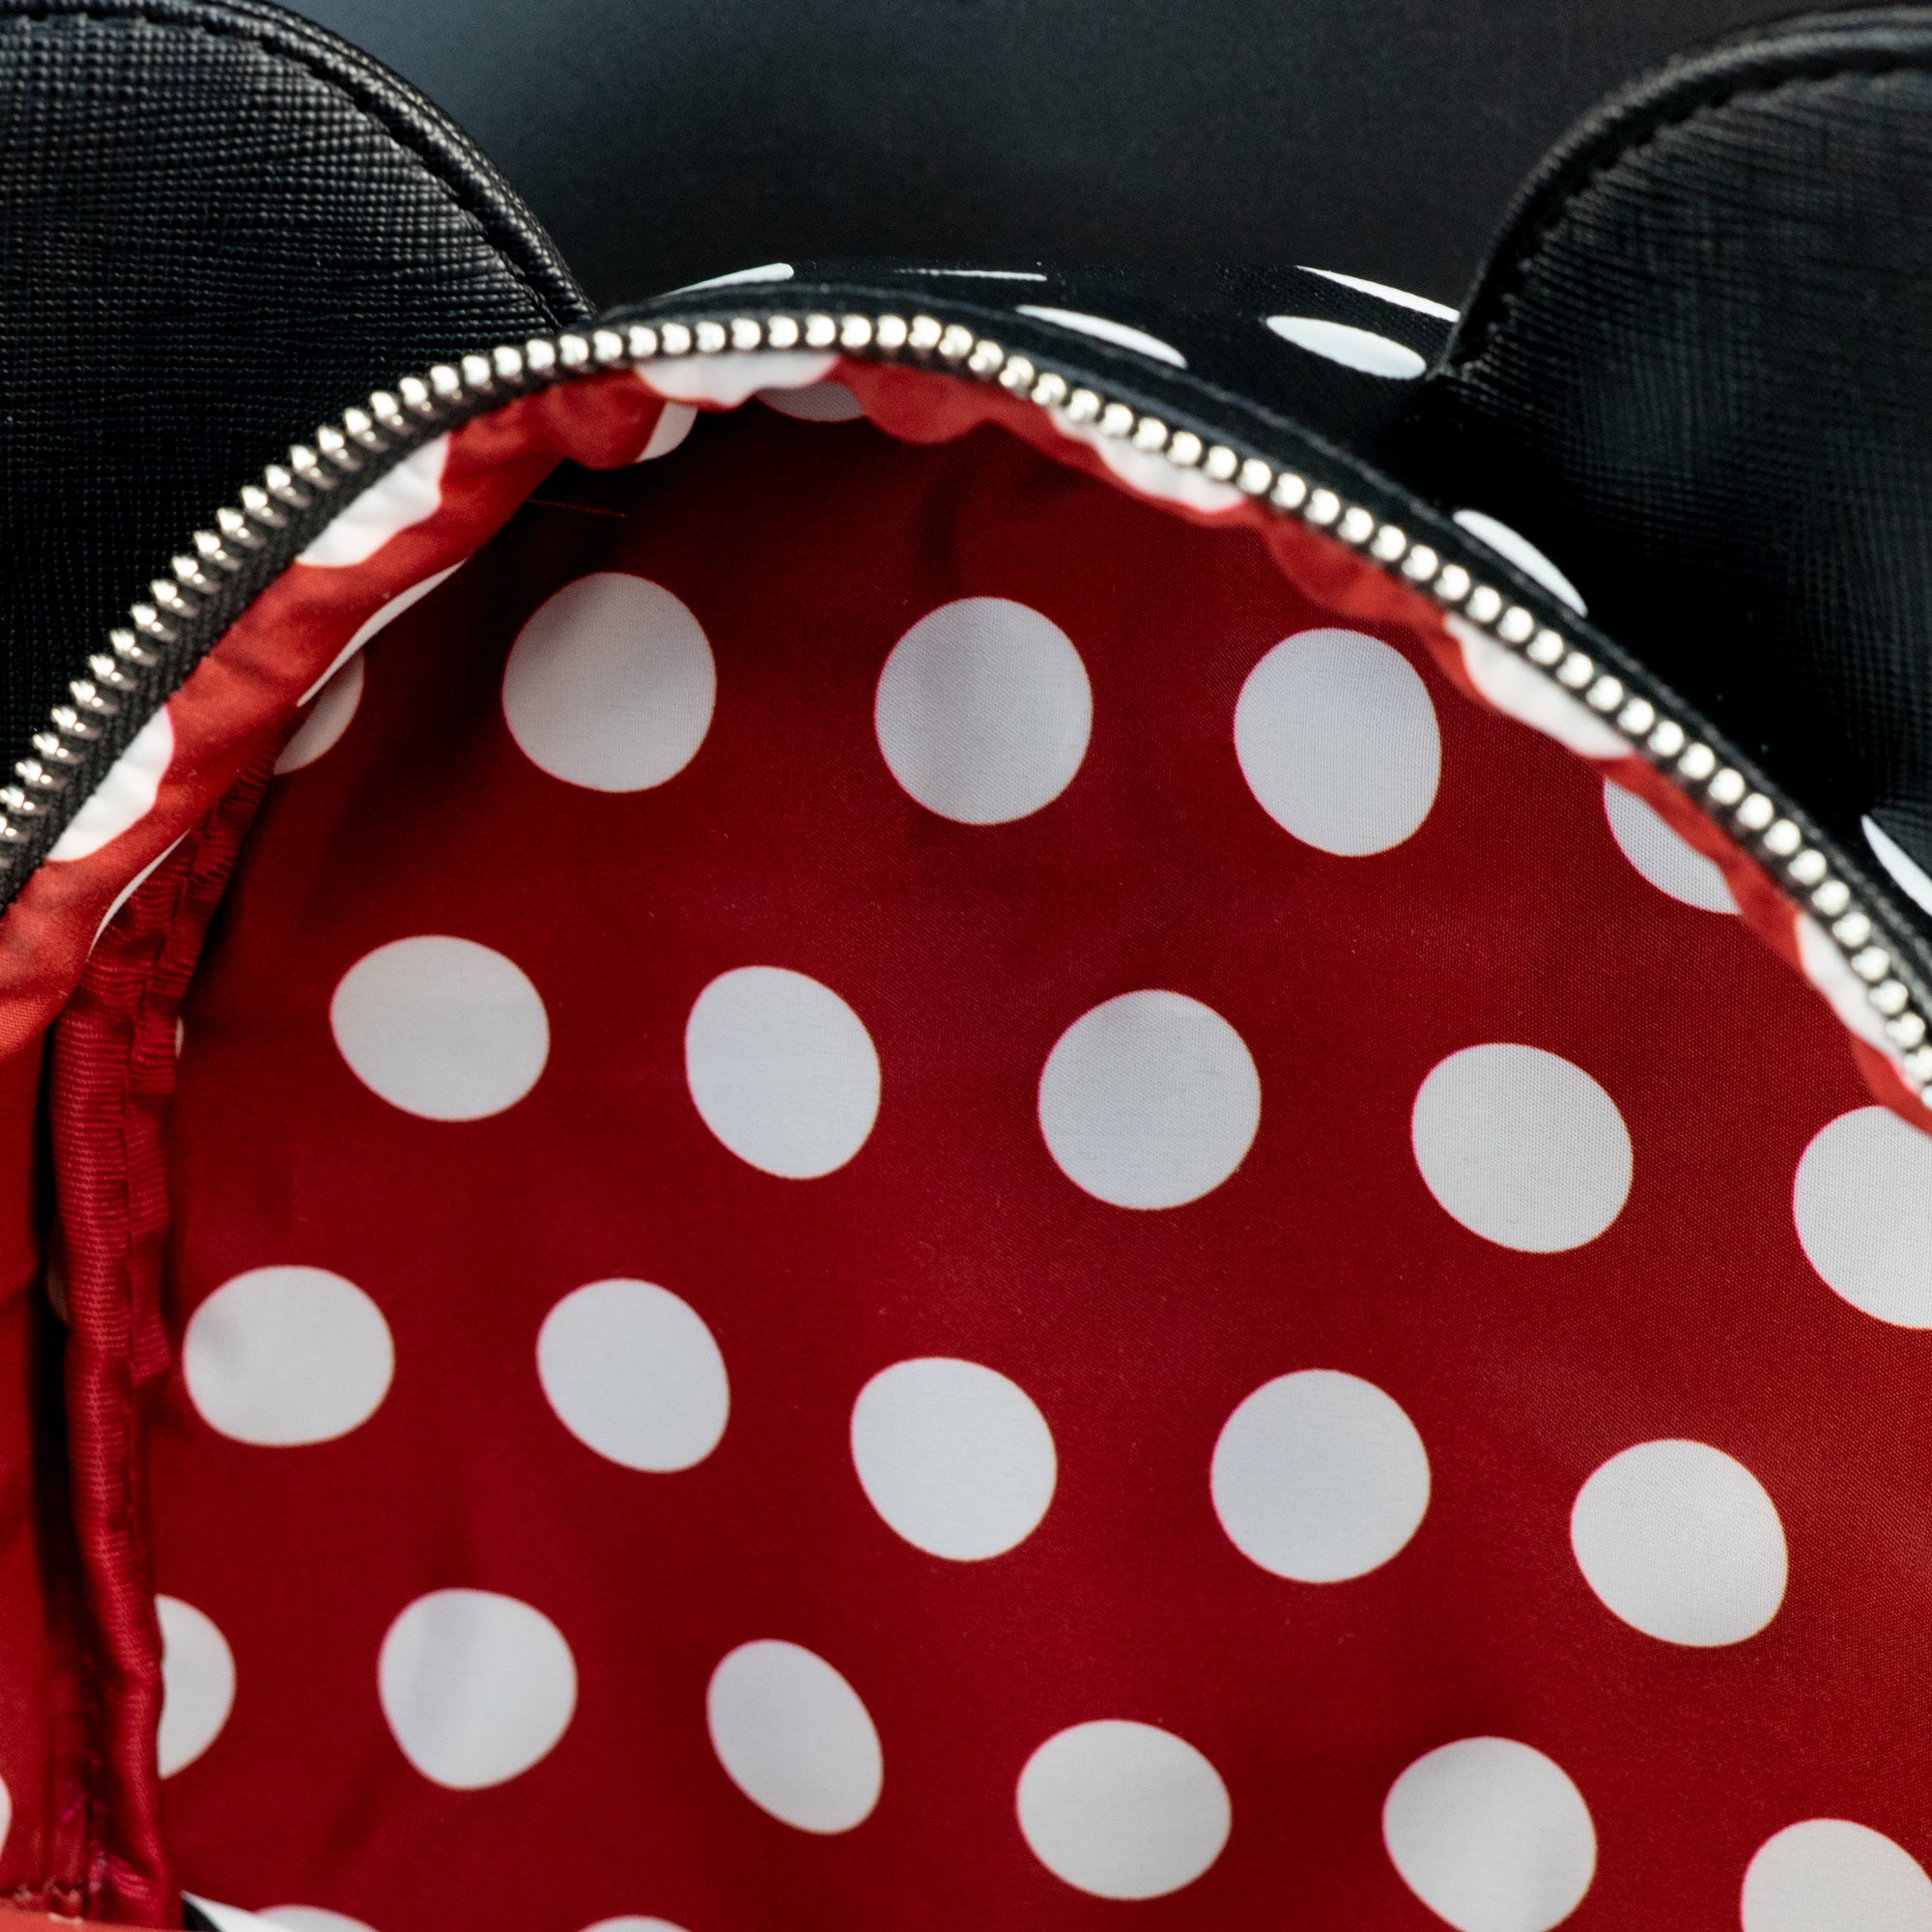 Loungefly x Disney Minnie Mouse Black Polka Dot Mini Backpack